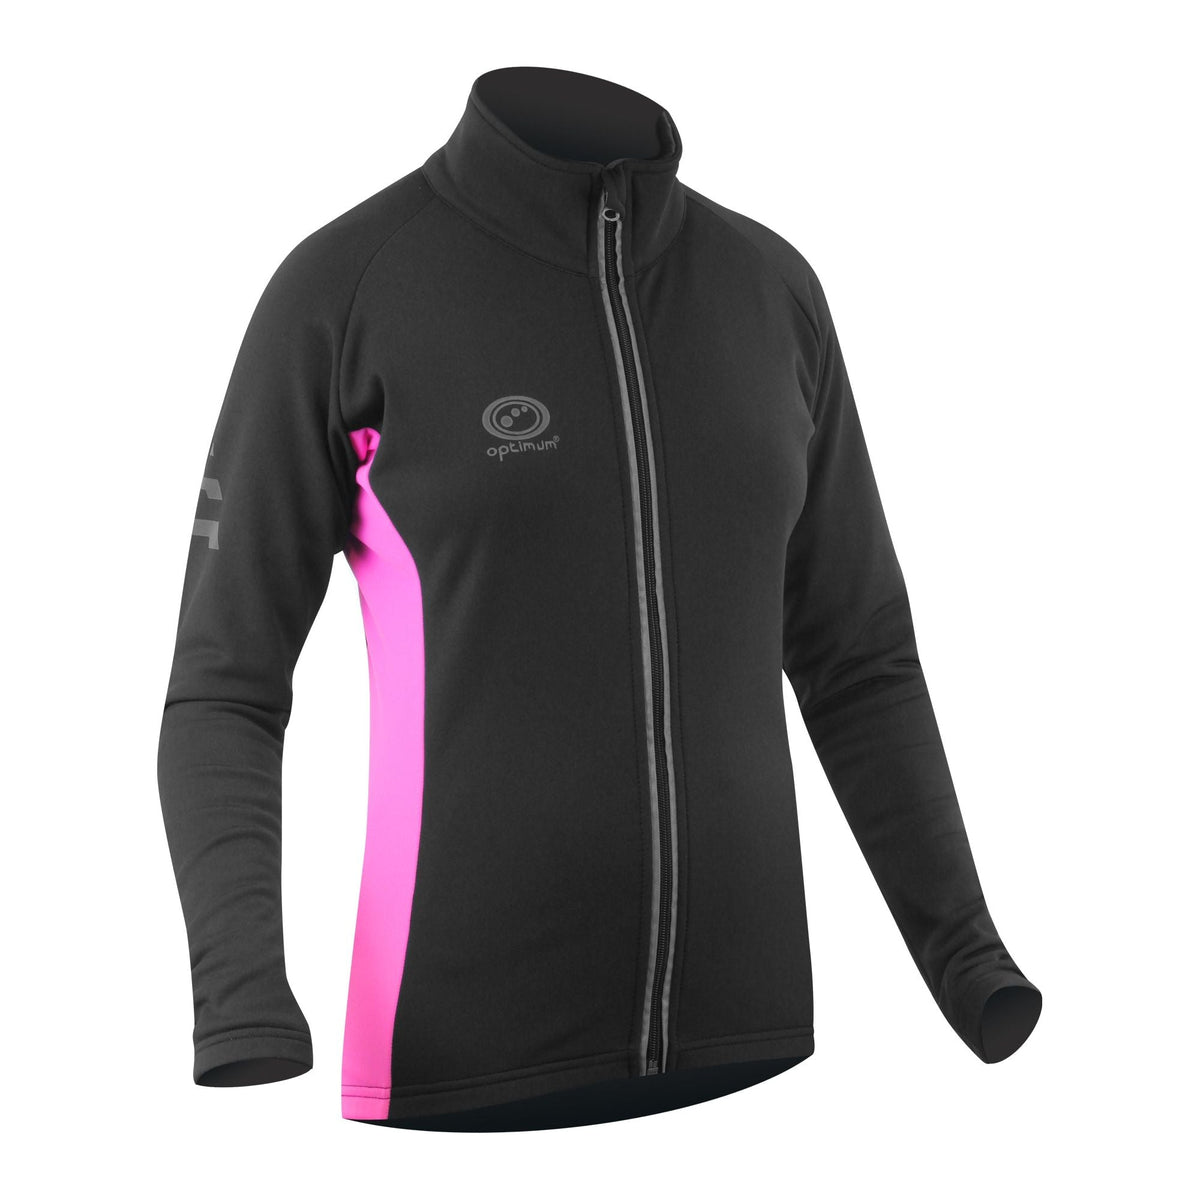 Nitebrite Roubaix Cycling Jacket Versatile Reflective Trim (Black/Pink) - Optimum